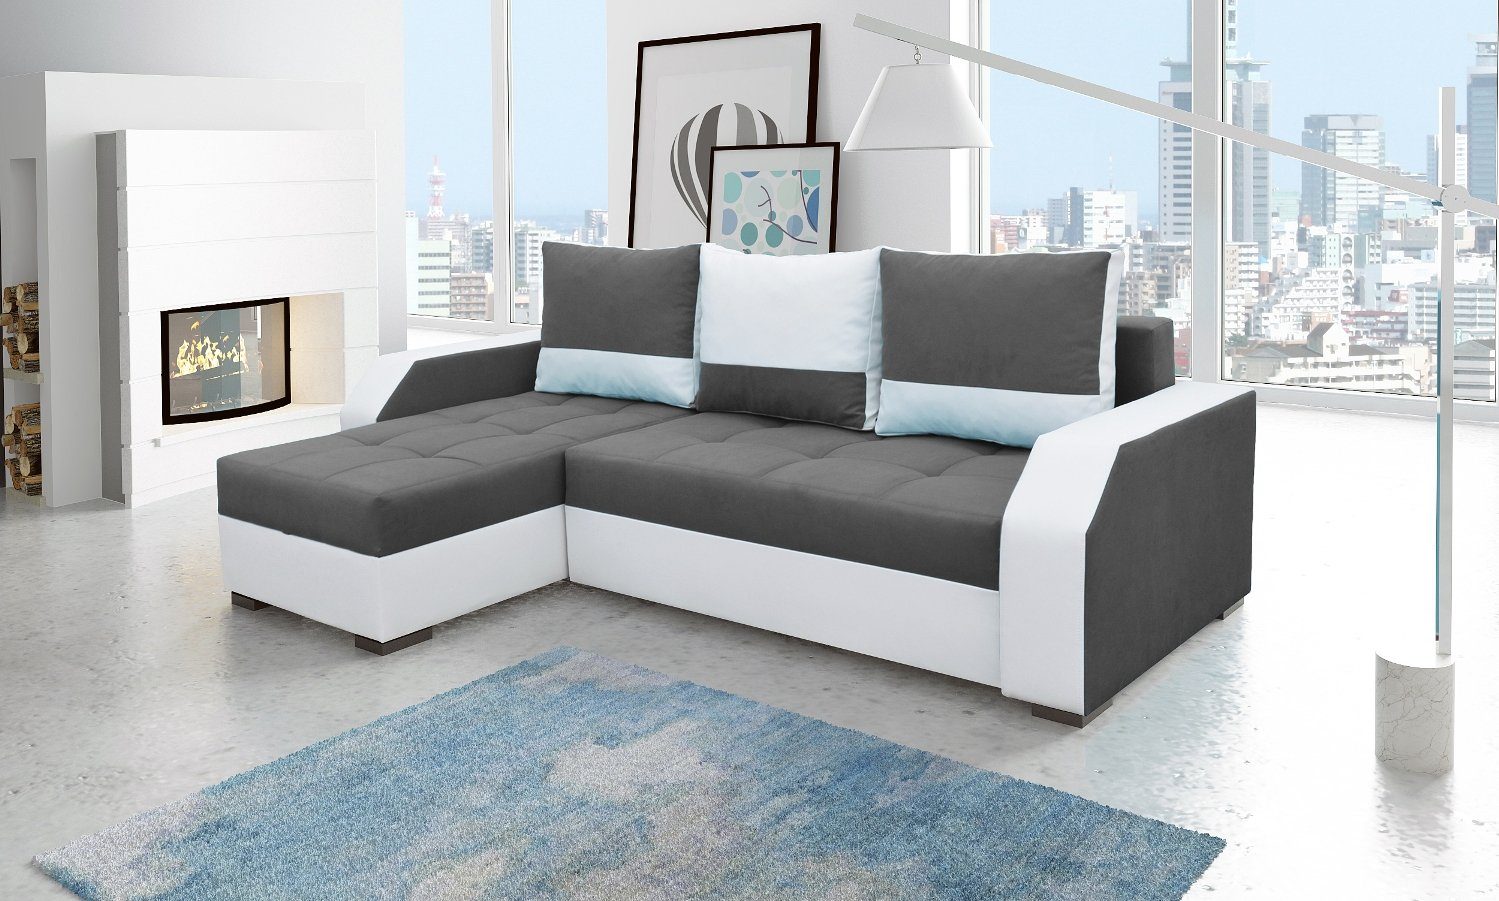 JVmoebel Ecksofa, Design Ecksofa Bettfunktion Couch Leder Textil Polster Sofas Couchen Dunkelgrau / Weiß